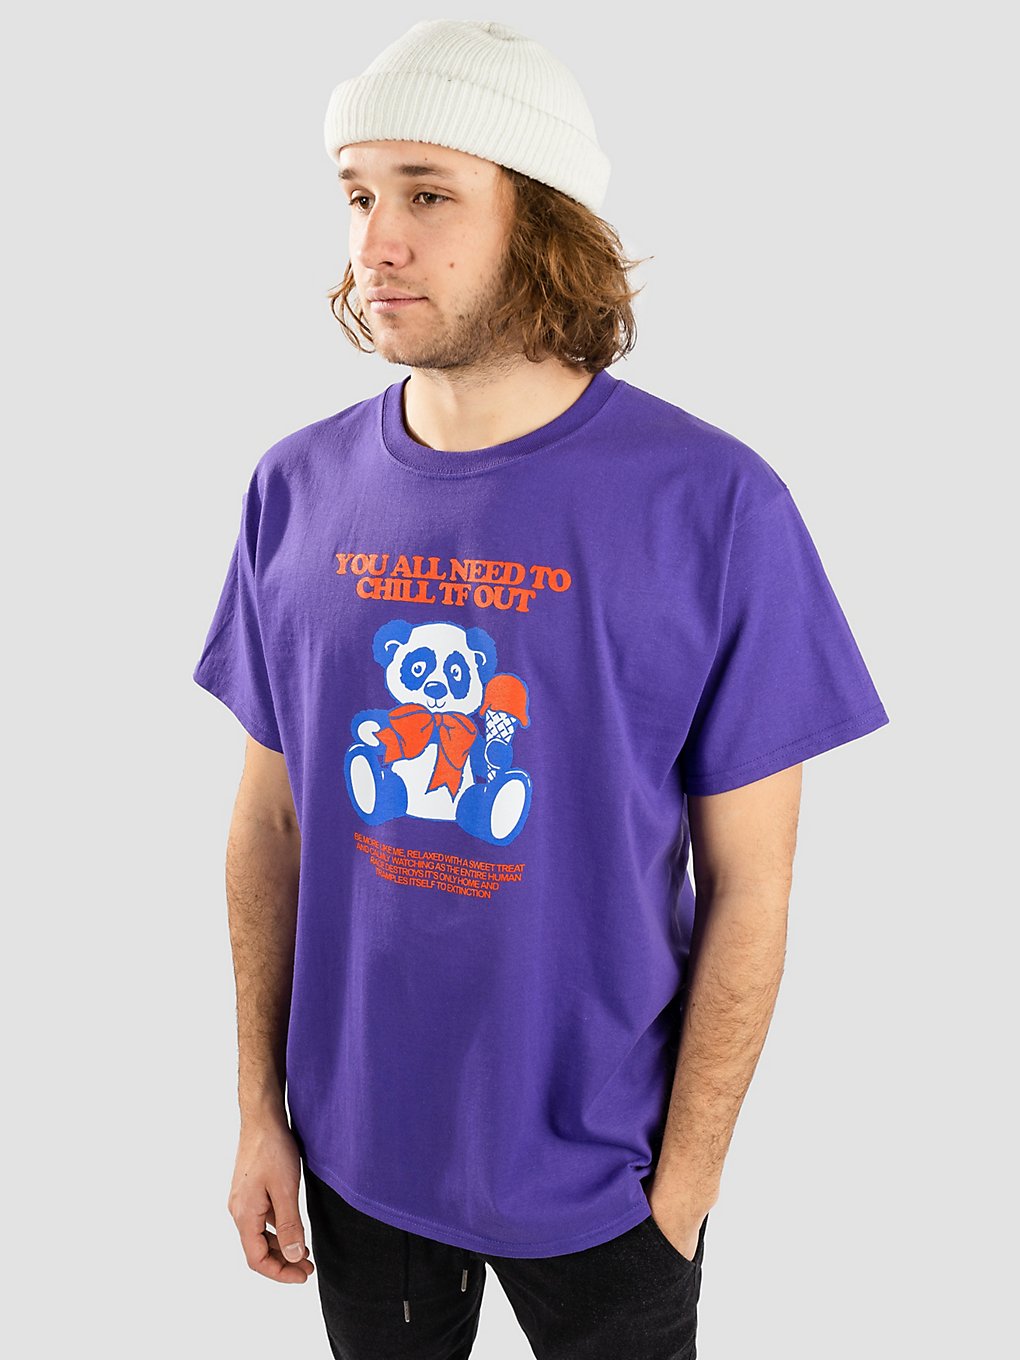 A.Lab Chill Tf Out T-Shirt purple kaufen